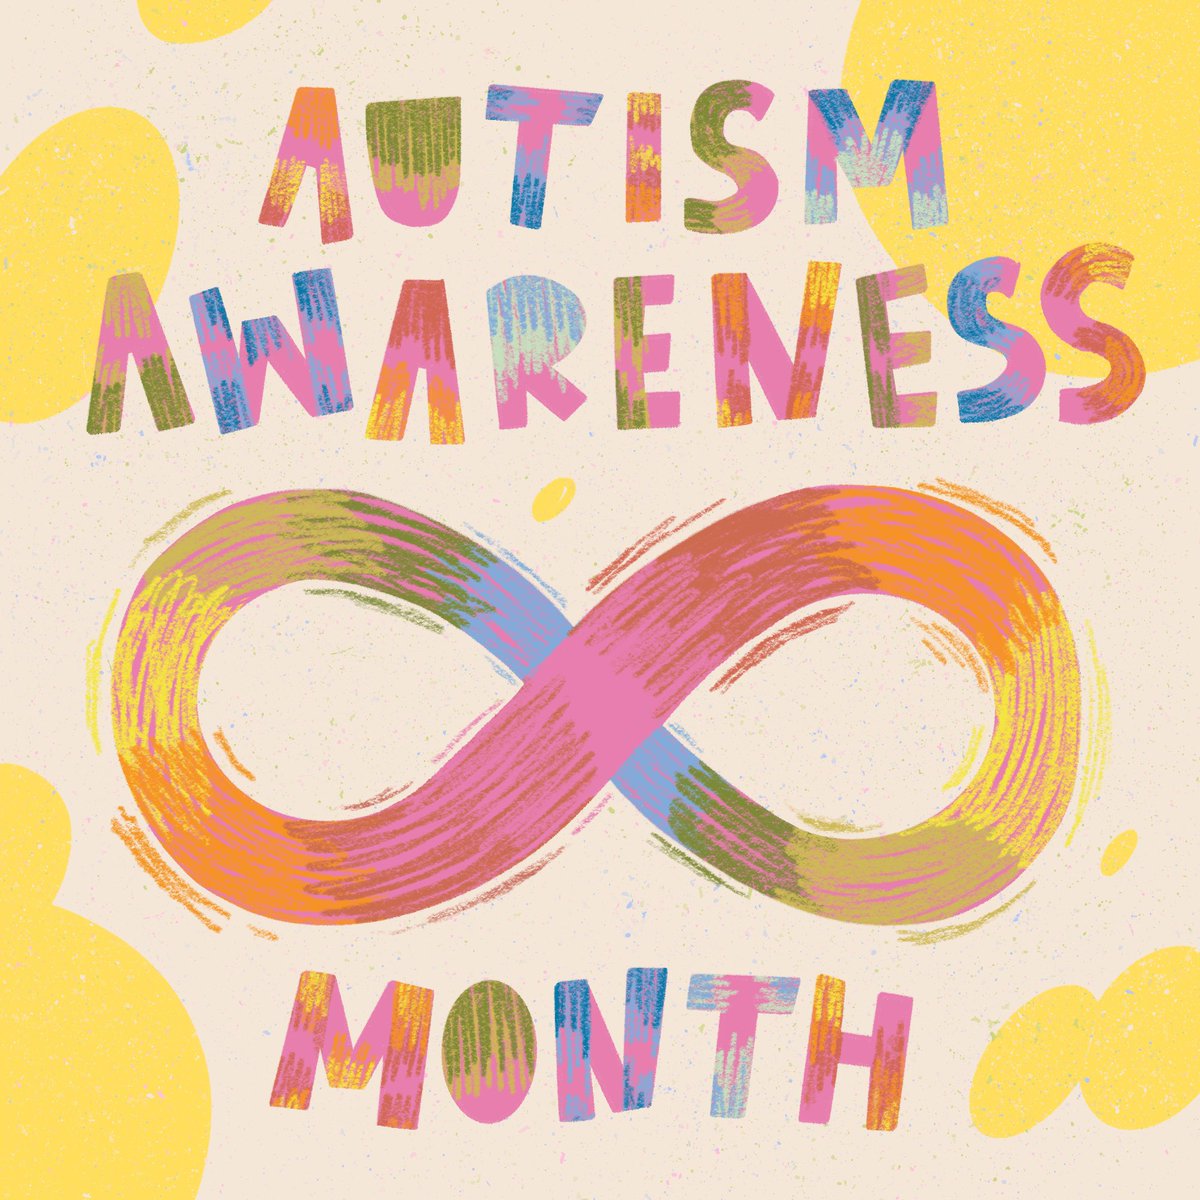 Happy autism awareness month!